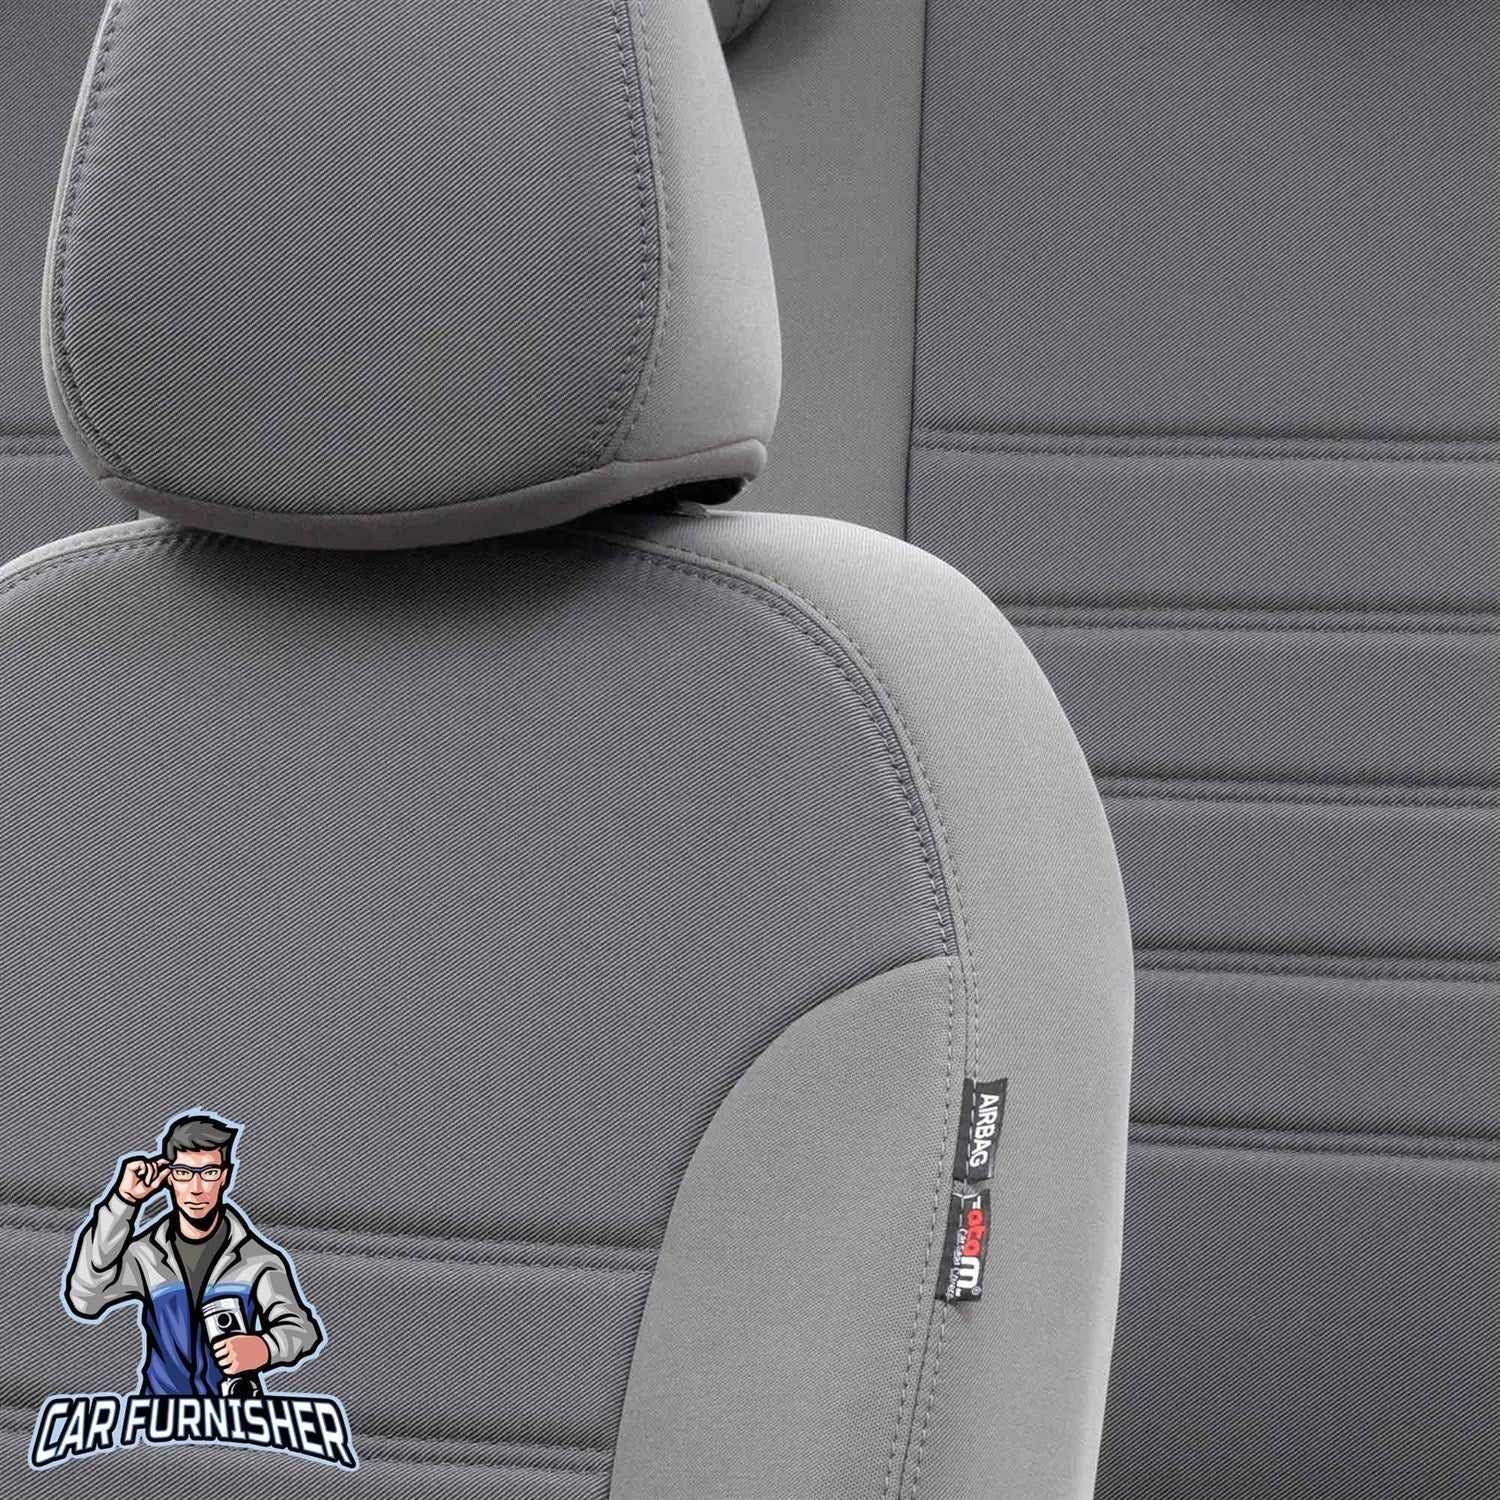 Renault Premium Seat Cover Original Jacquard Design Gray Front Seats (2 Seats + Handrest + Headrests) Jacquard Fabric